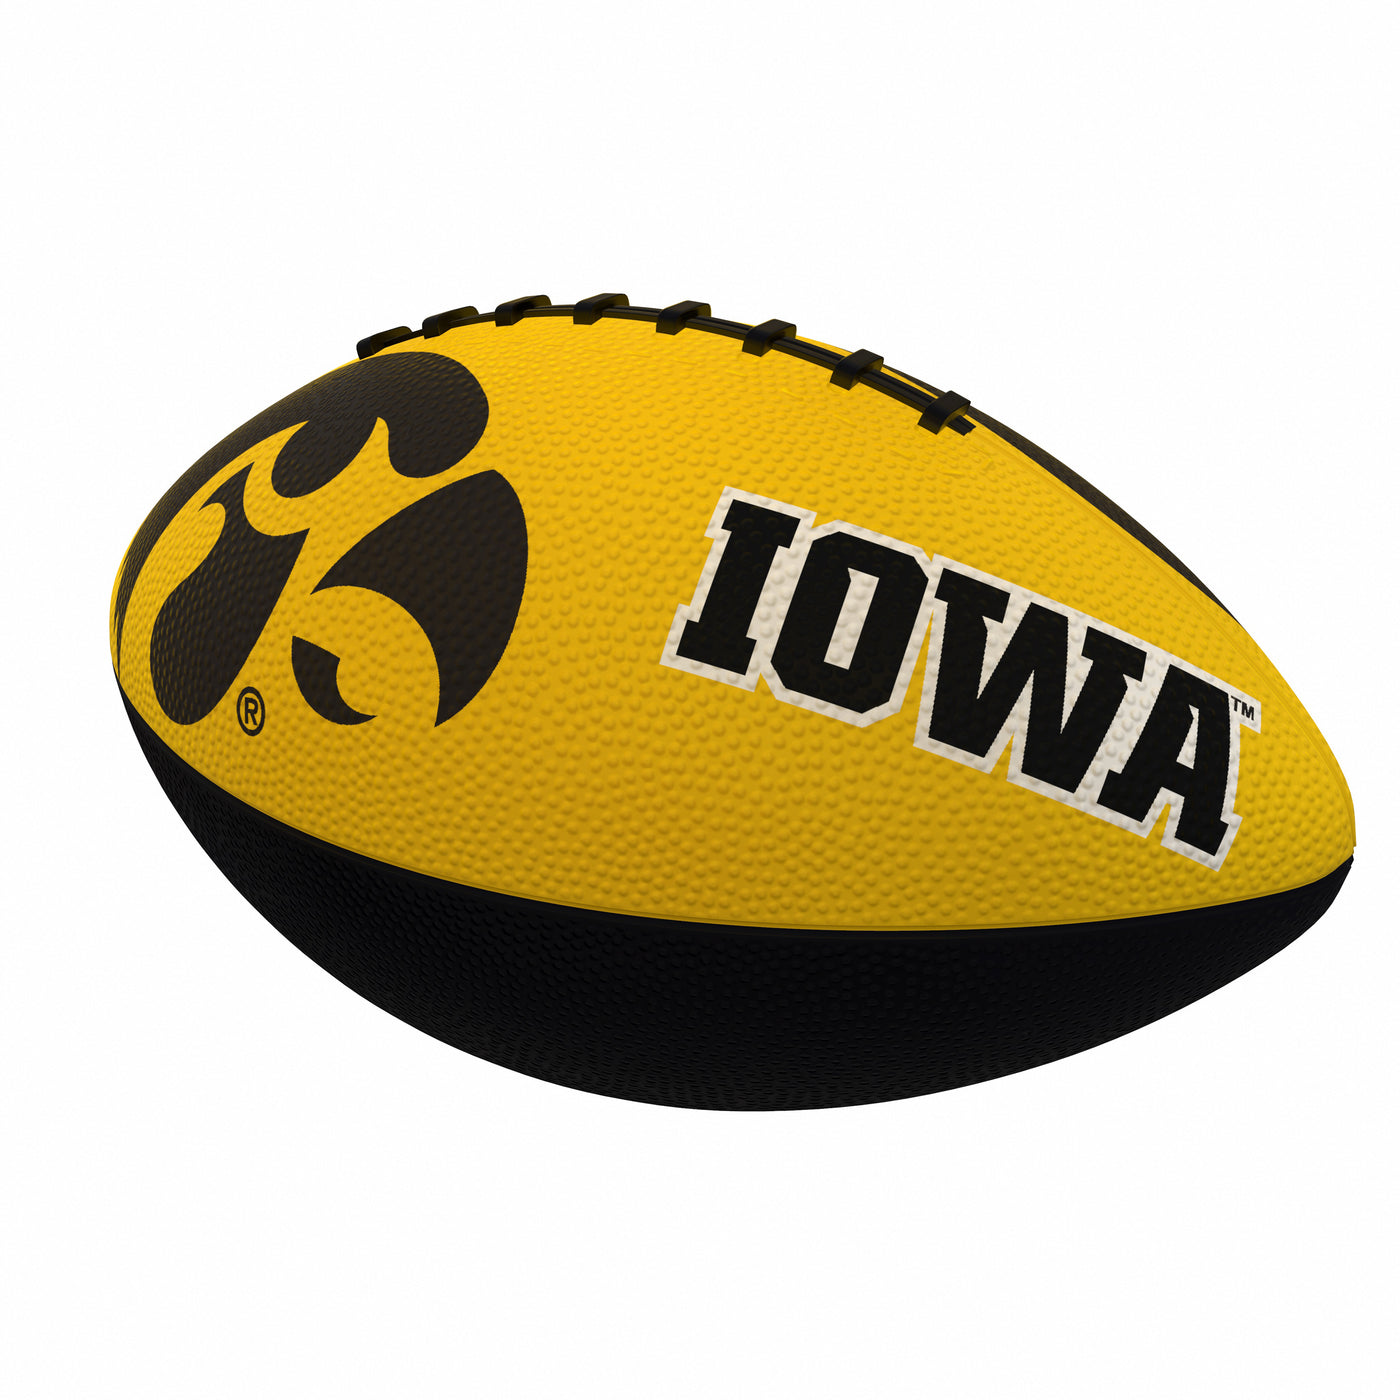 Iowa Combo Logo Junior-Size Rubber Football